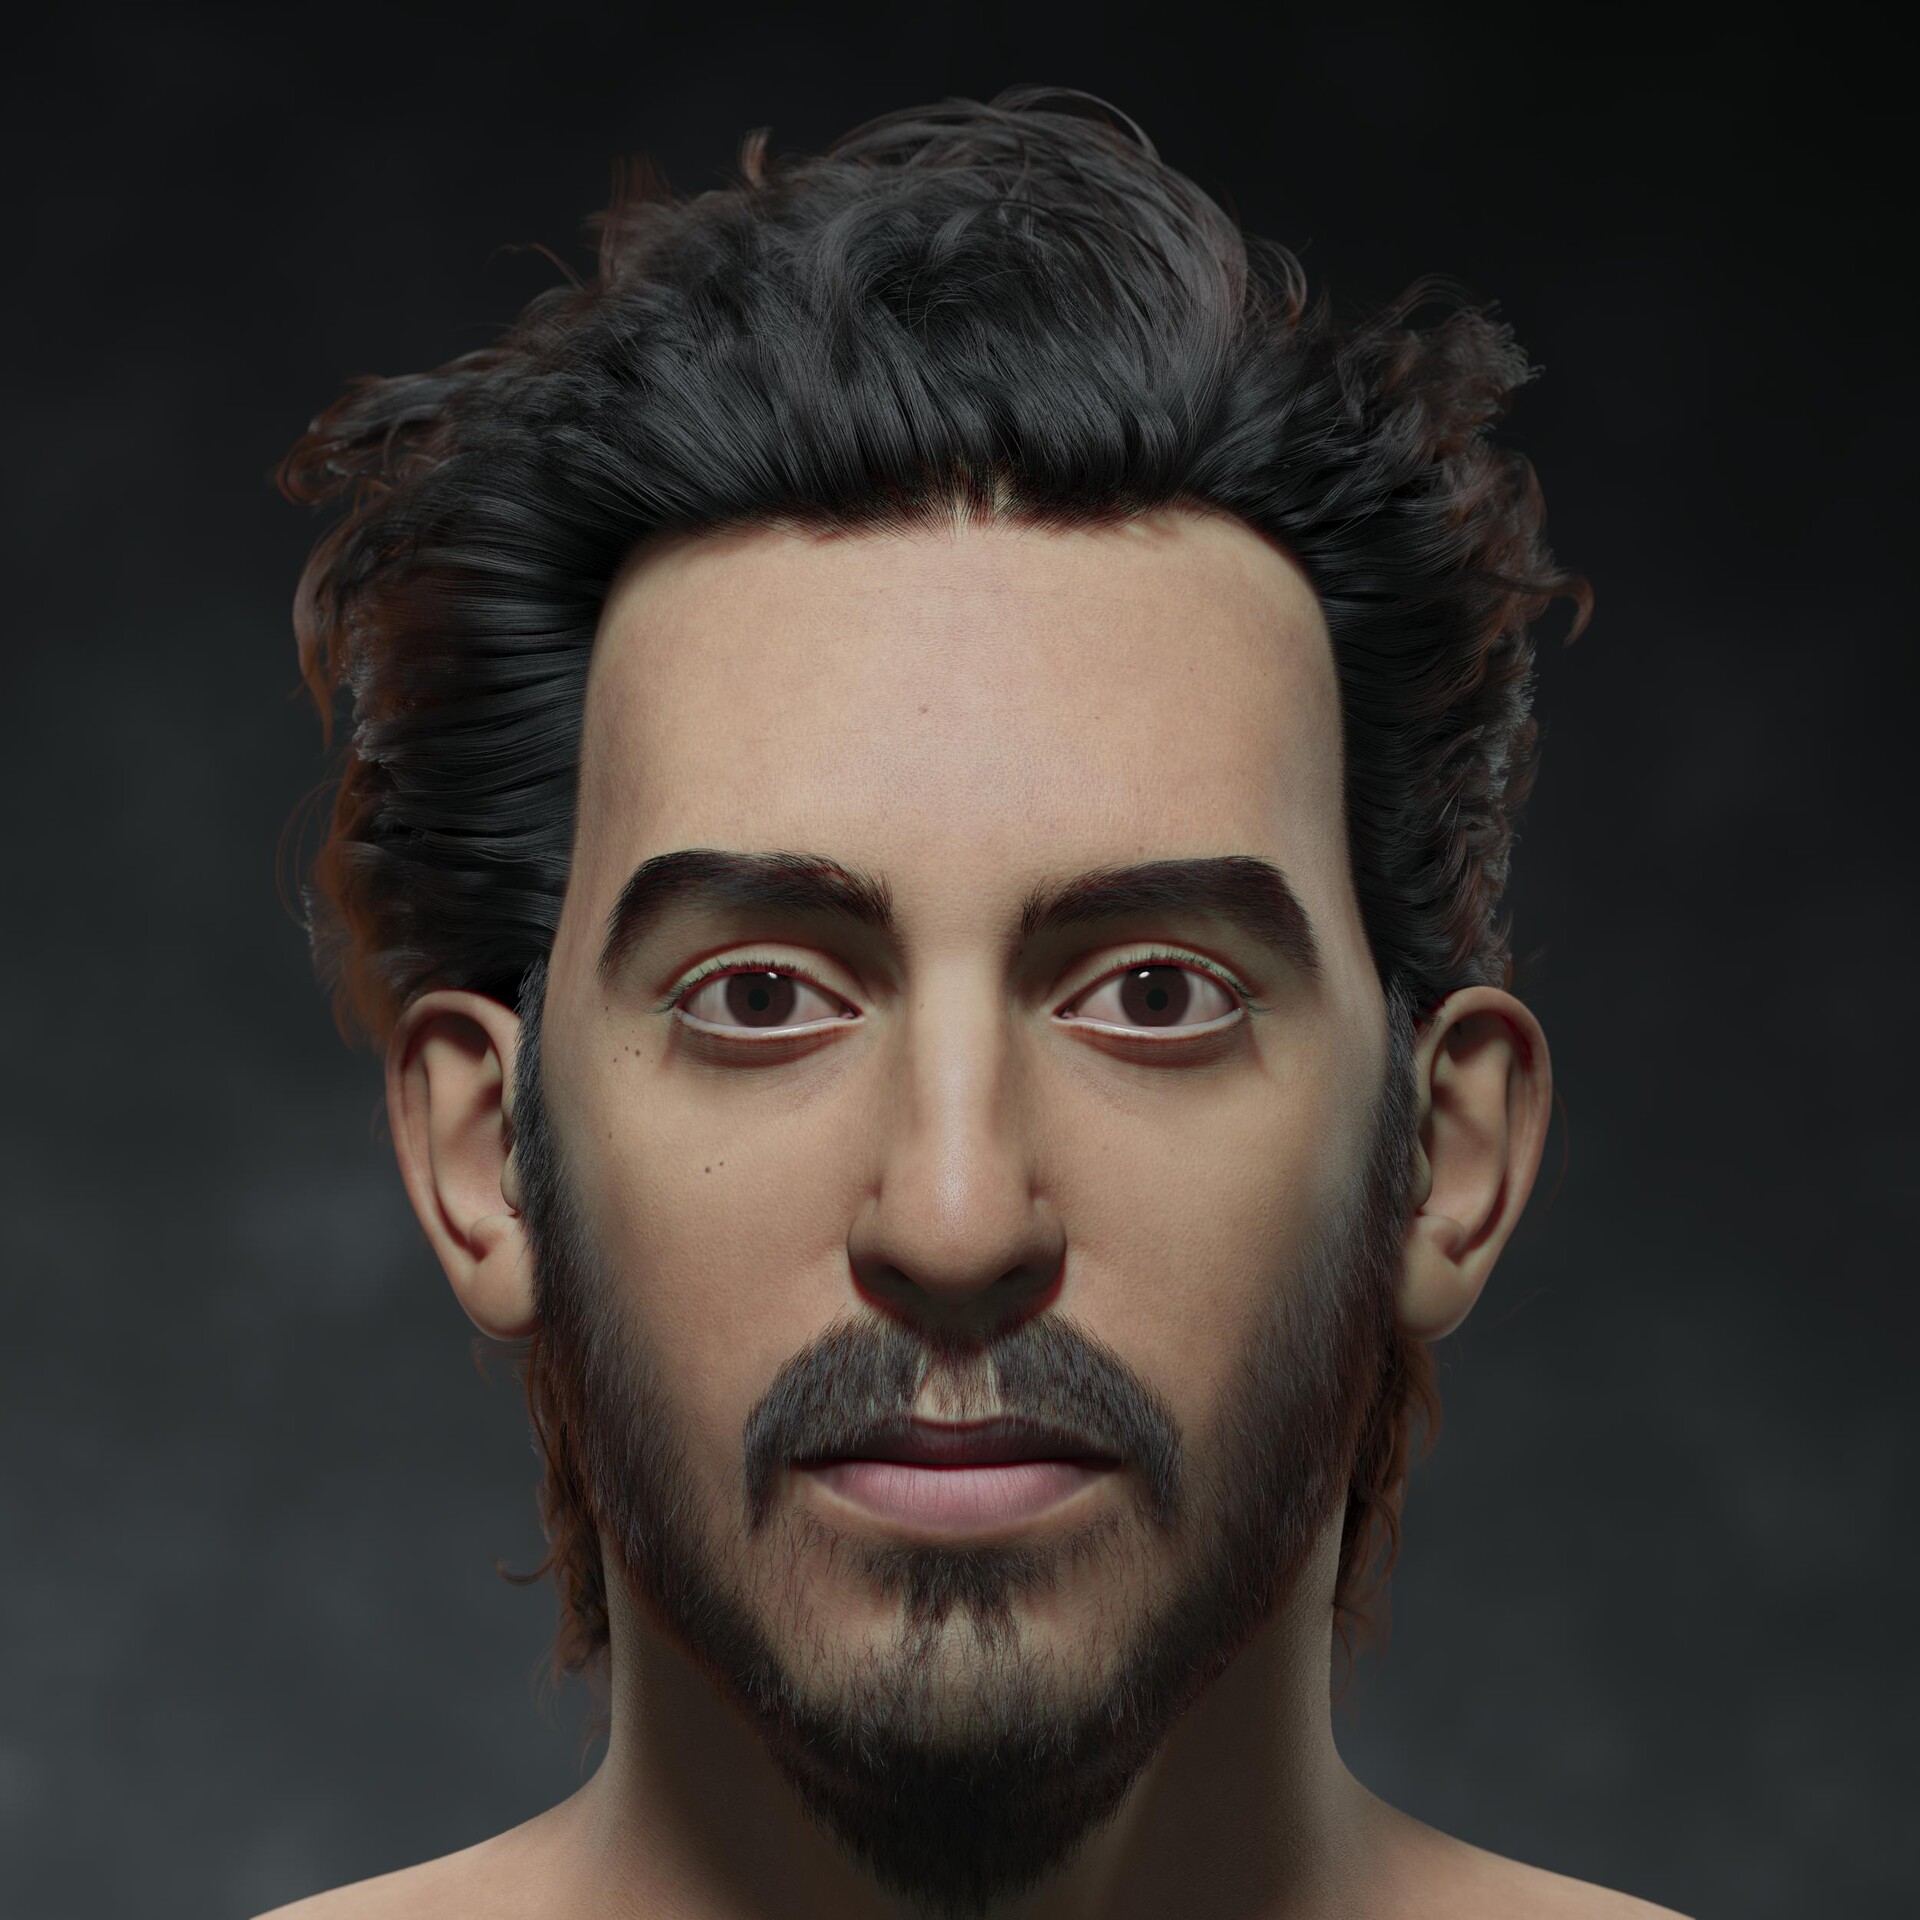 ArtStation - 3D Male Portrait Likeness by Vishal Rein